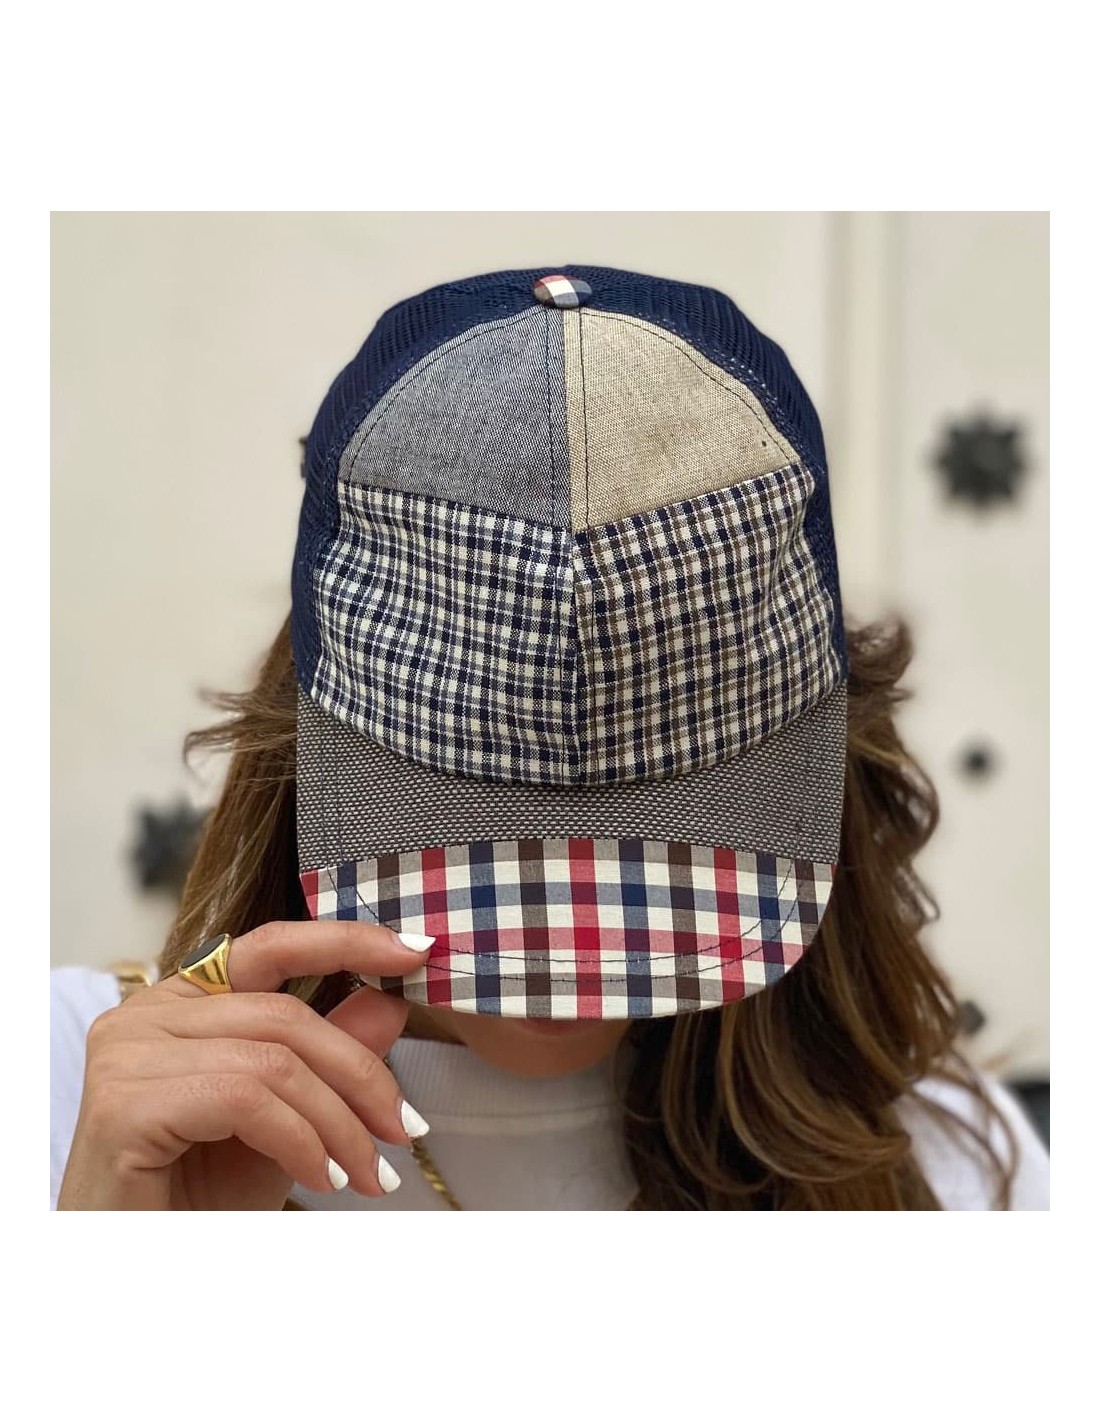 Shop Summer Caps for Women - Women's Caps Summer - Raceu Hats Online